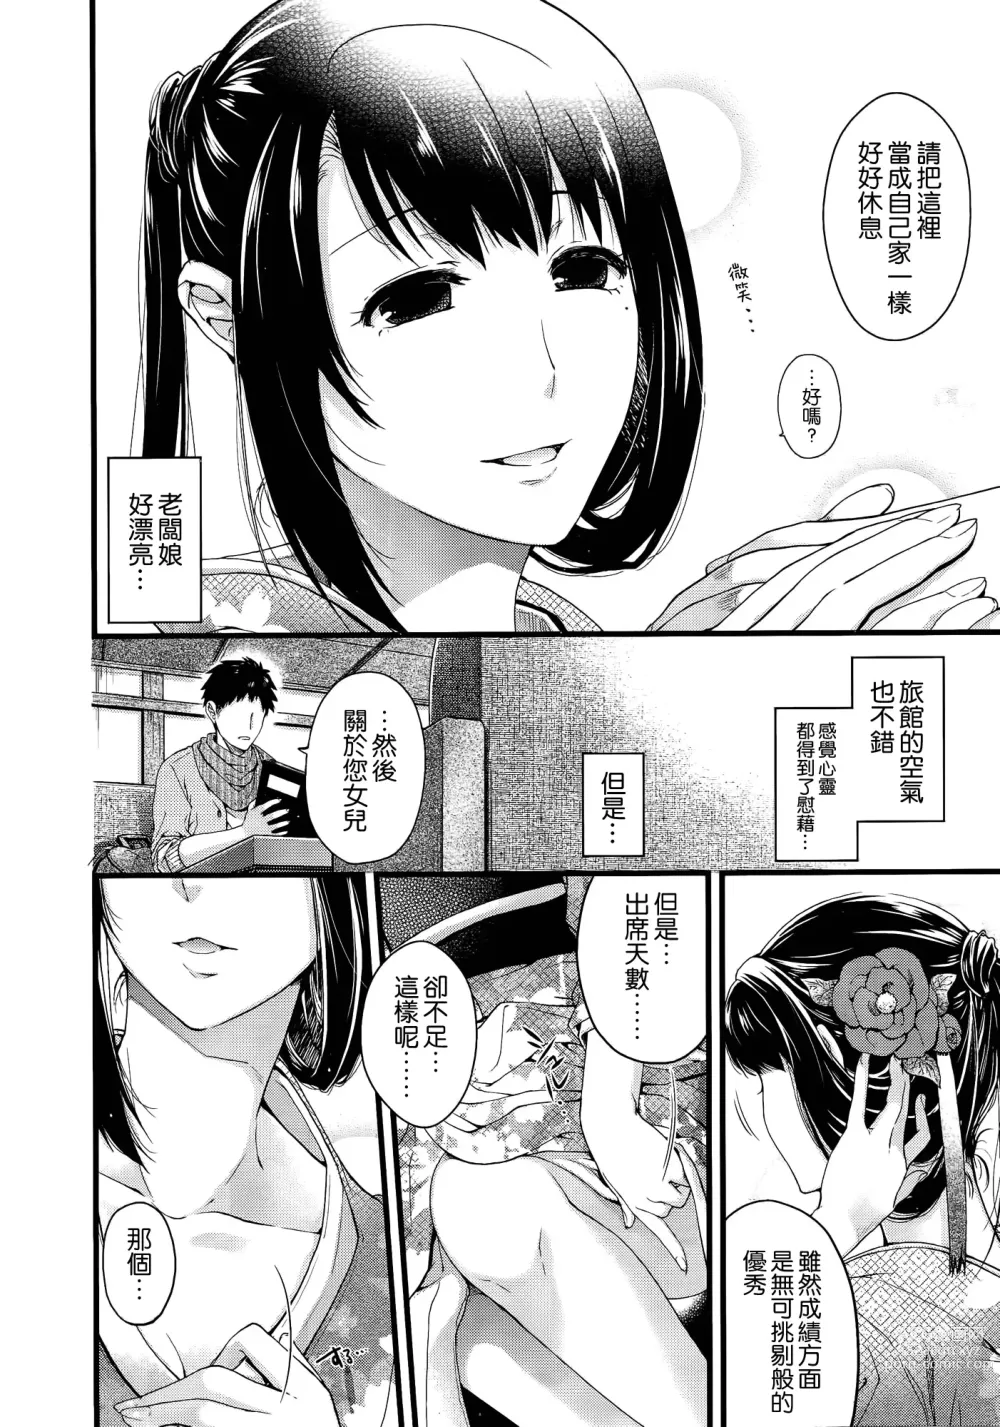 Page 4 of manga 妖と艶の方程式